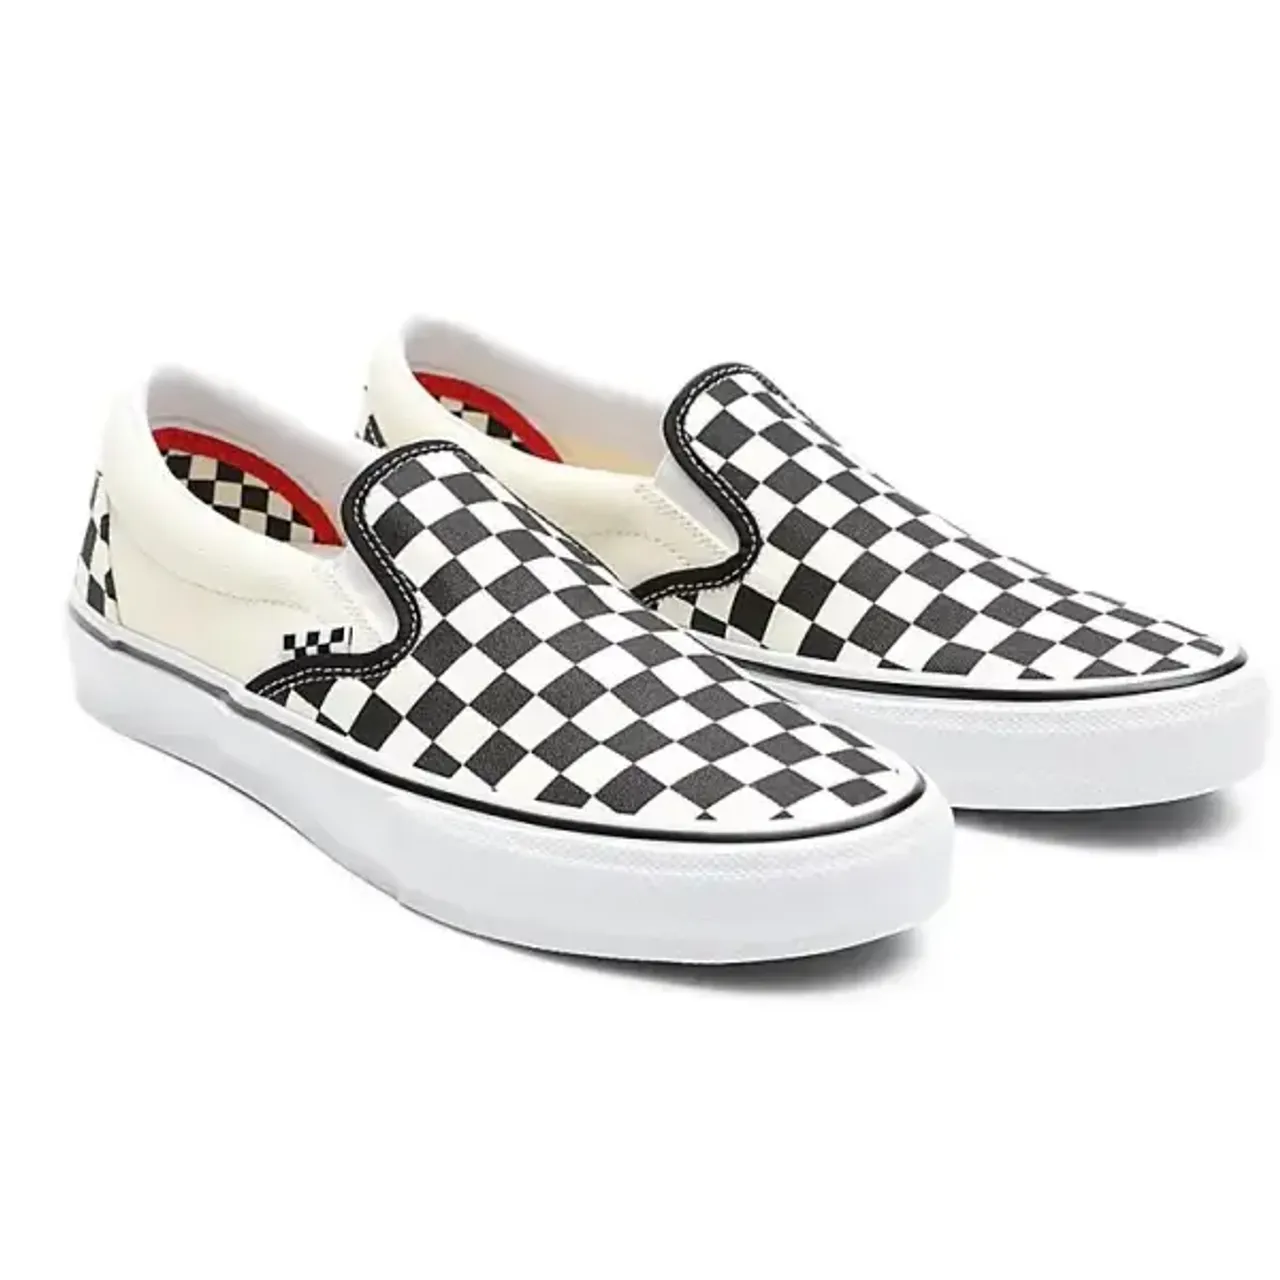 Vans Skate Slip-On Shoes (Checkerboard